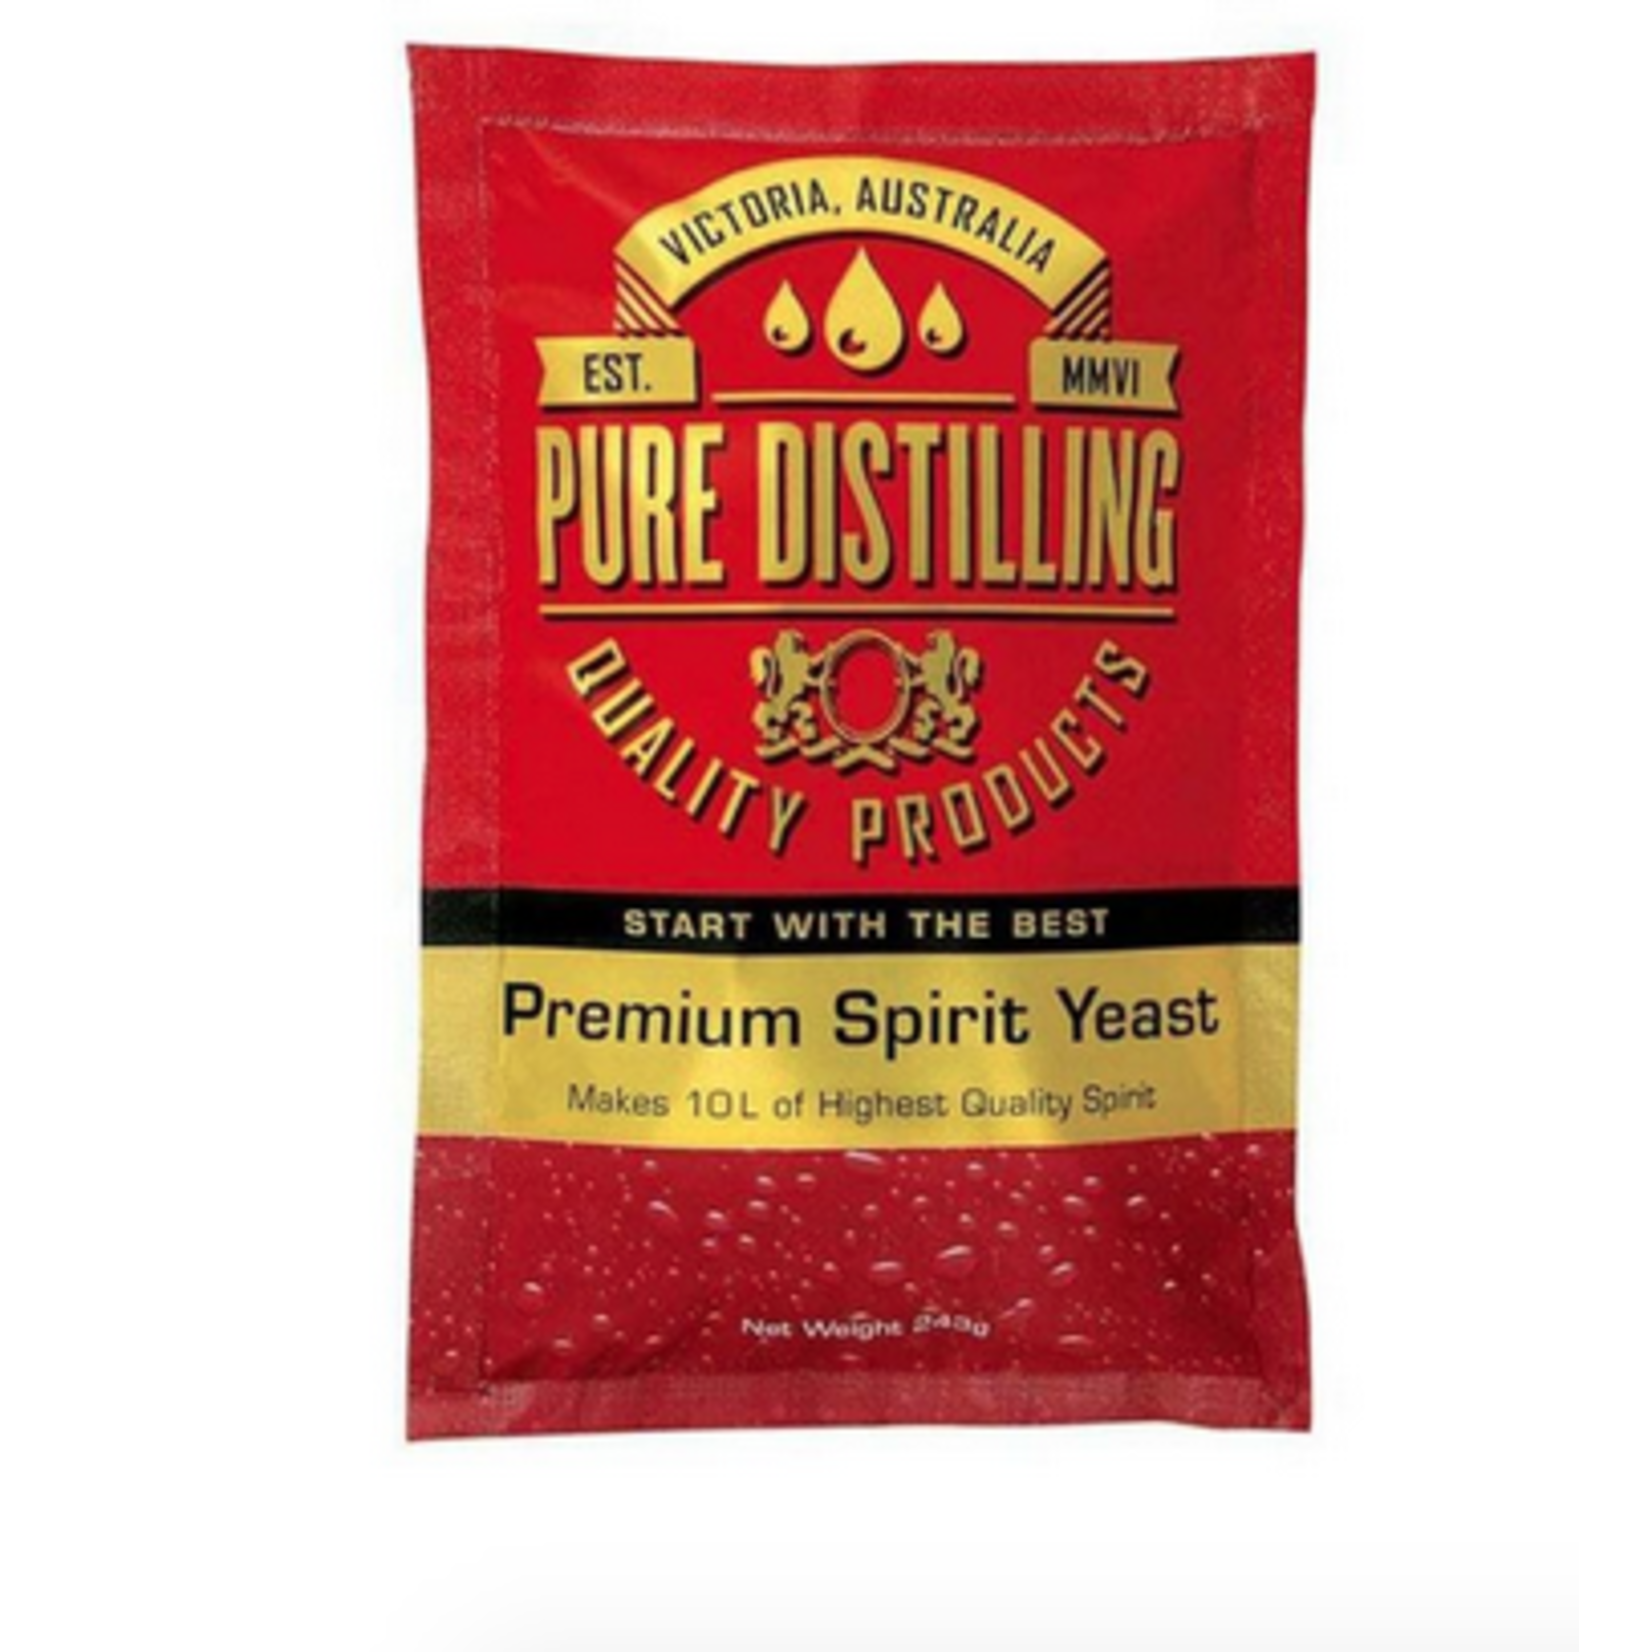 Pure distilling Pure distilling Spirit Yeast